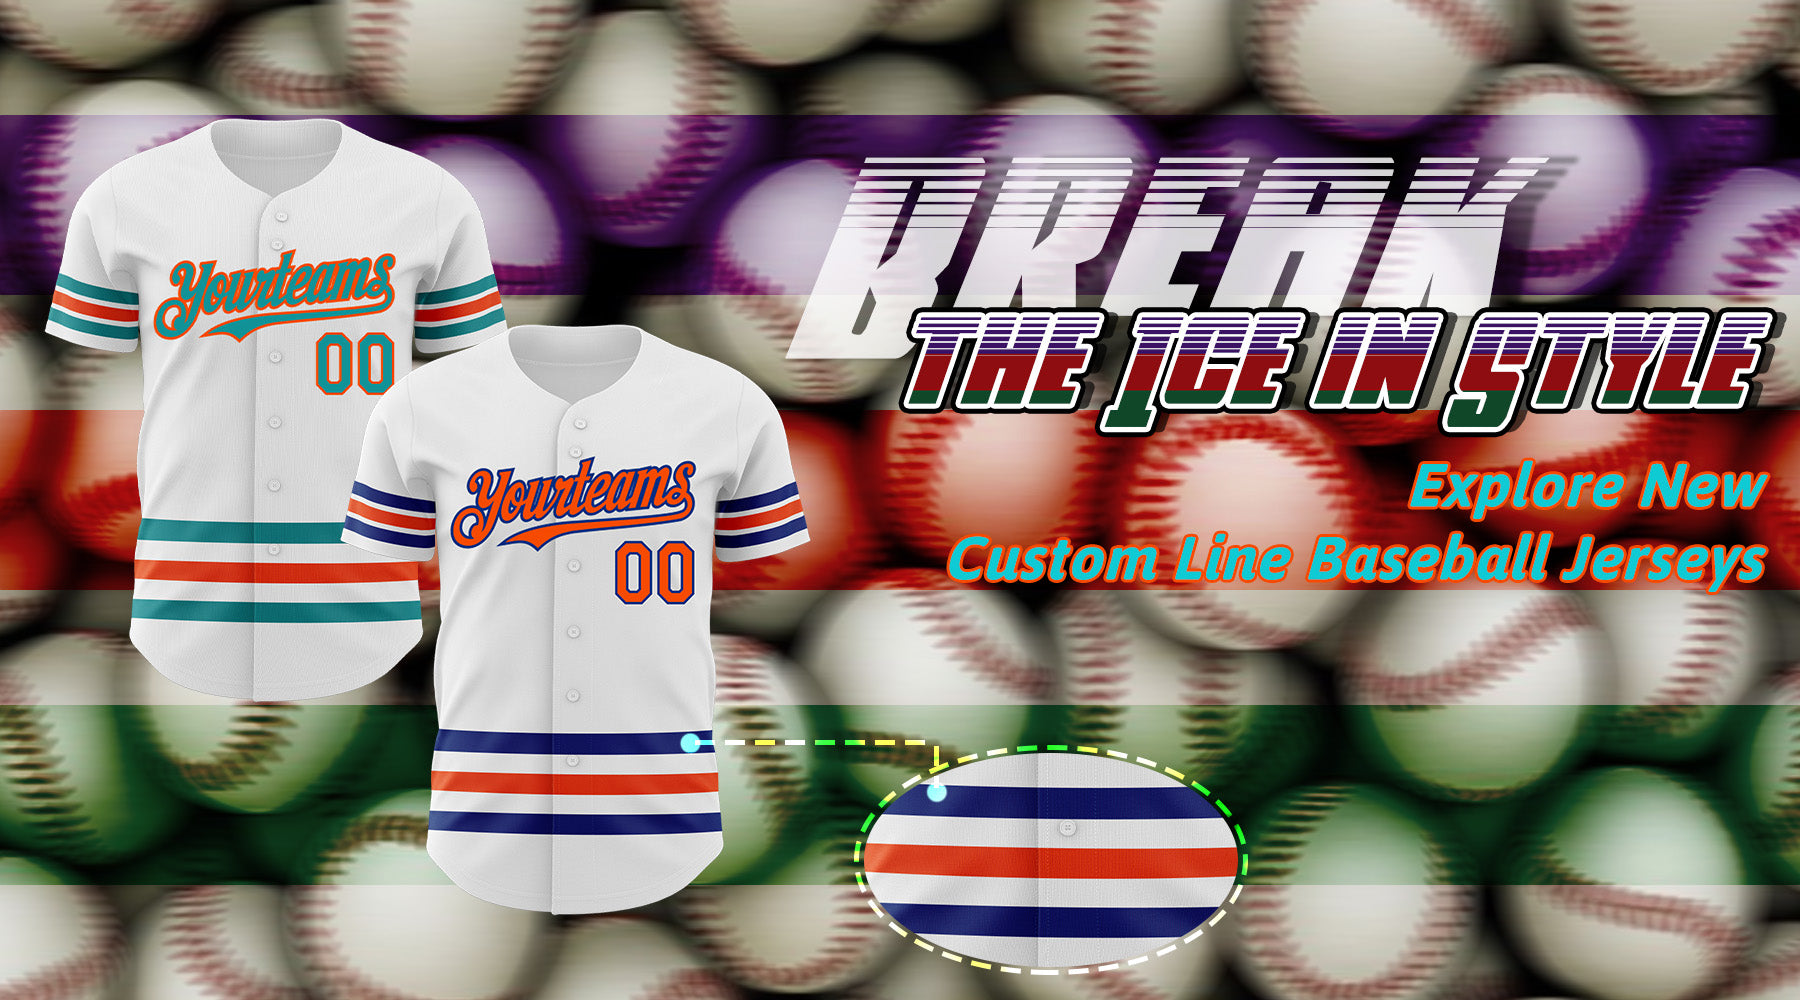 custom line baseball jersey